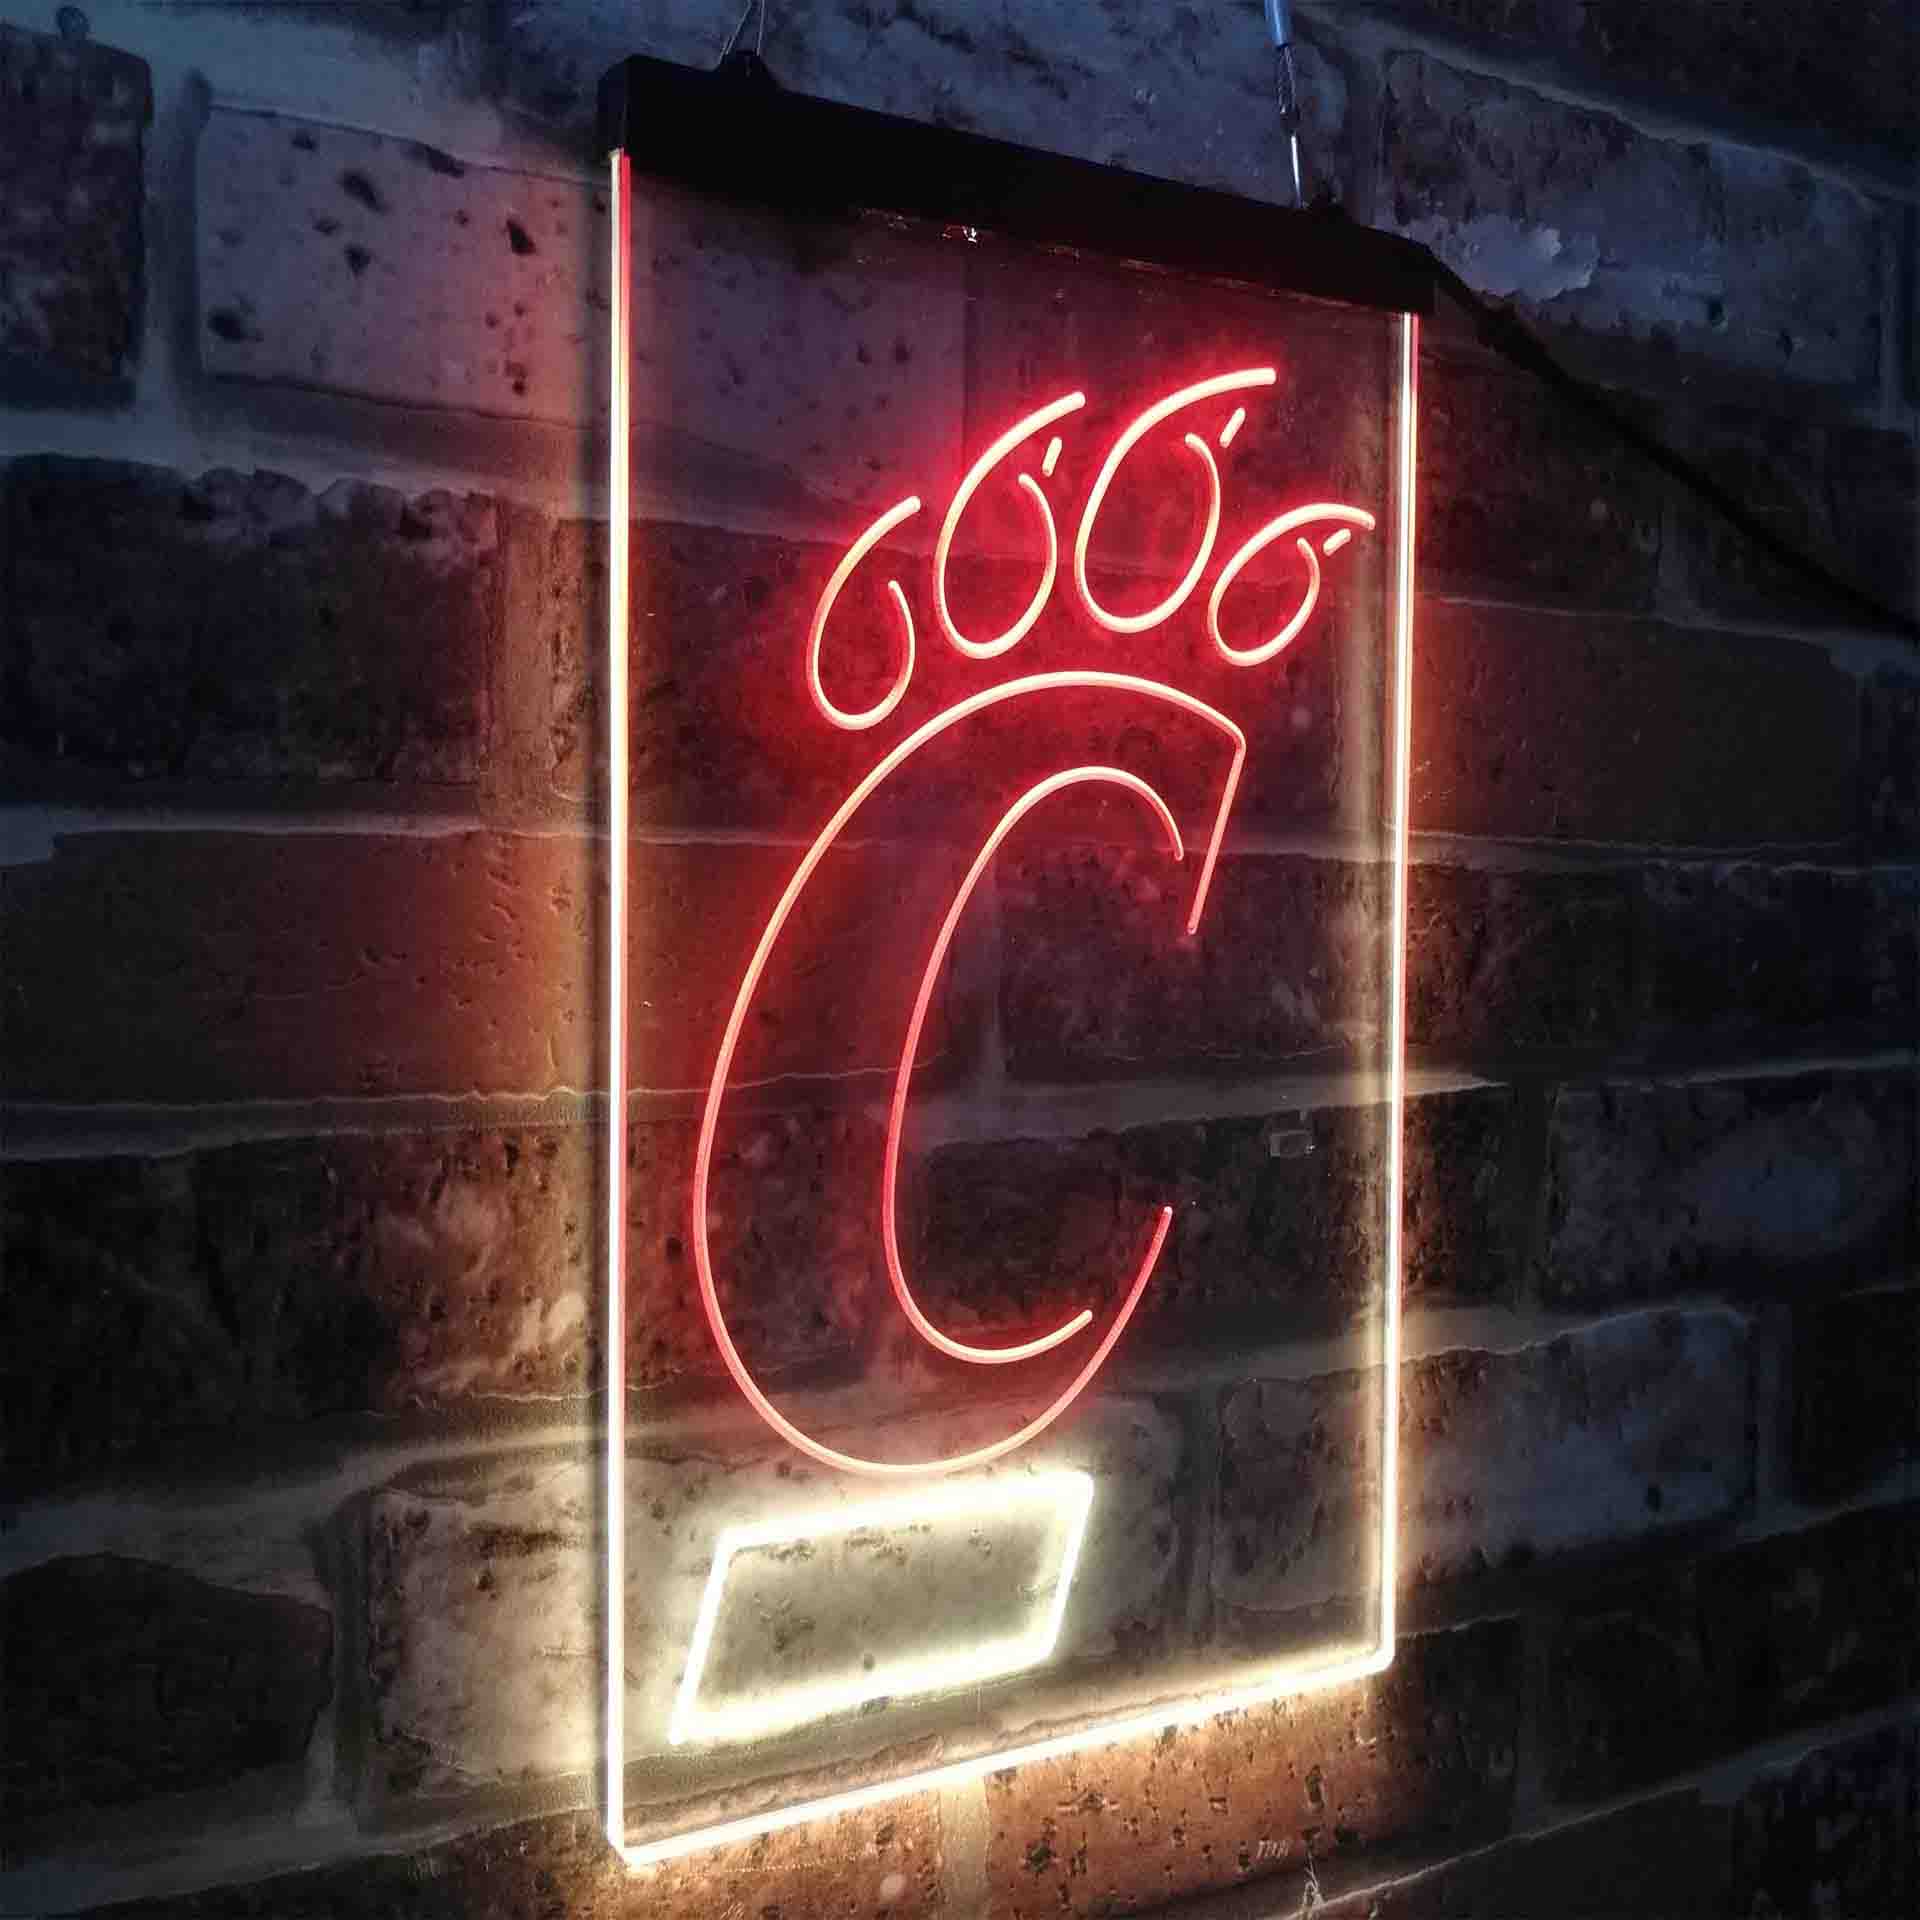 University of Cincinnati Bearcats NCAA College Football LED Neon Sign